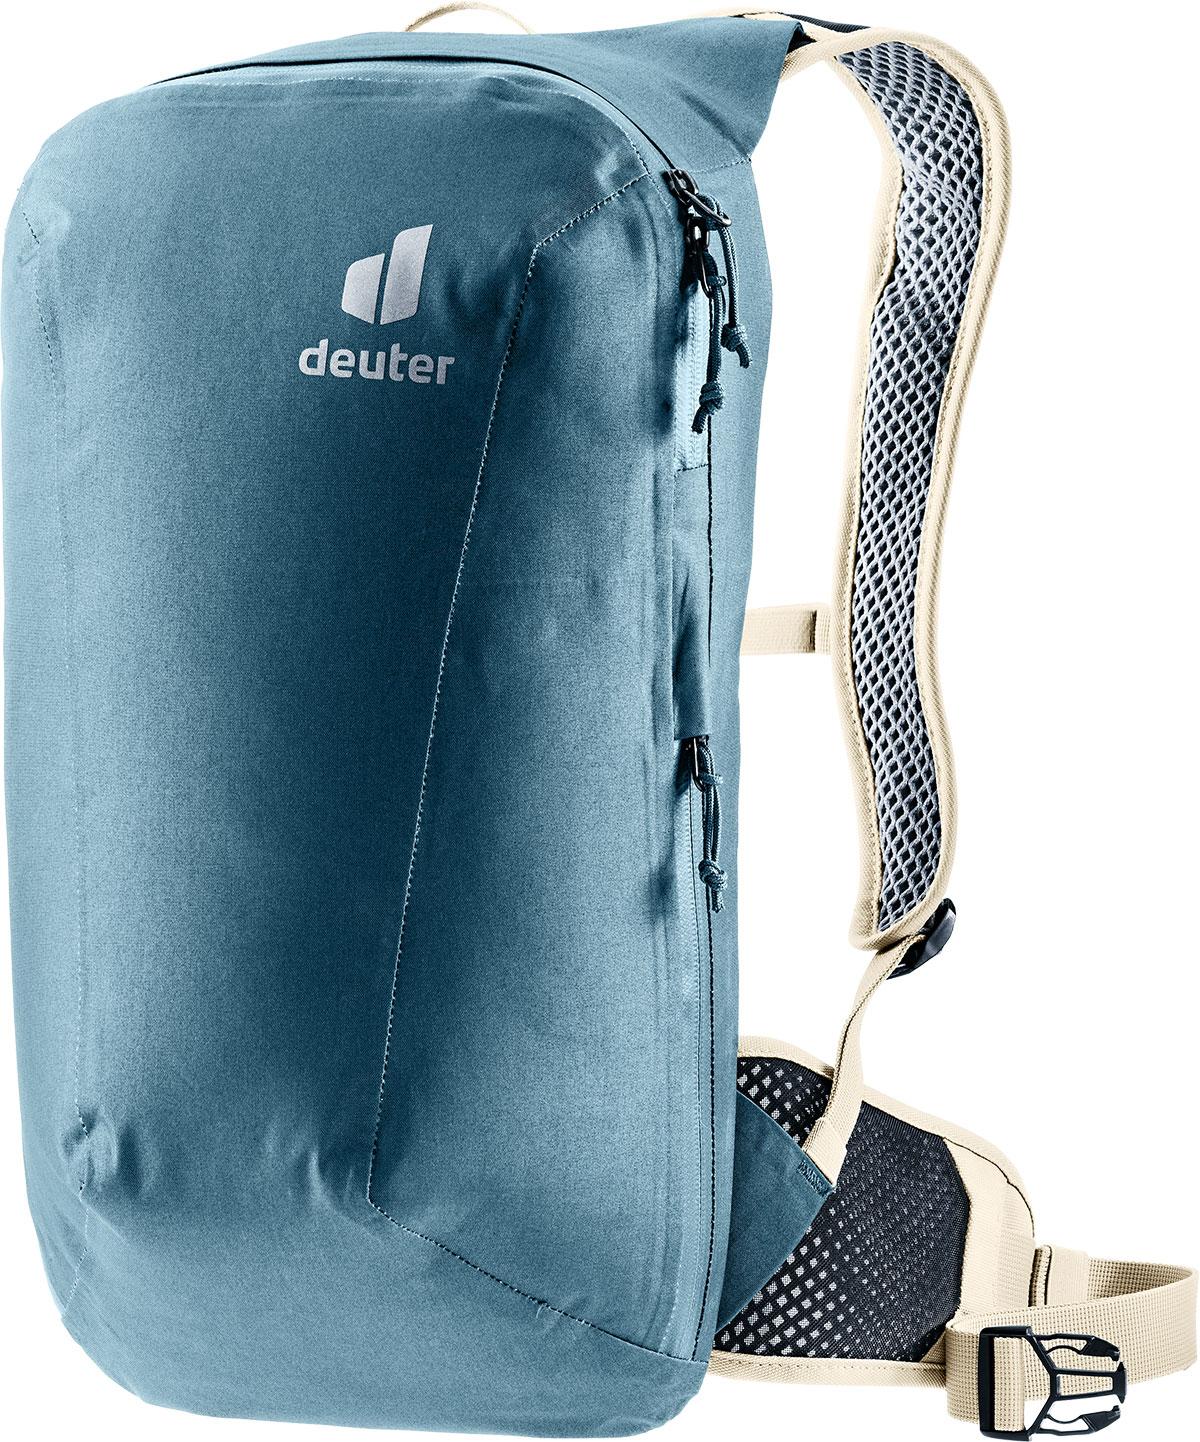 Deuter Plamort 12 Waterproof Backpack - Atlantic Desert